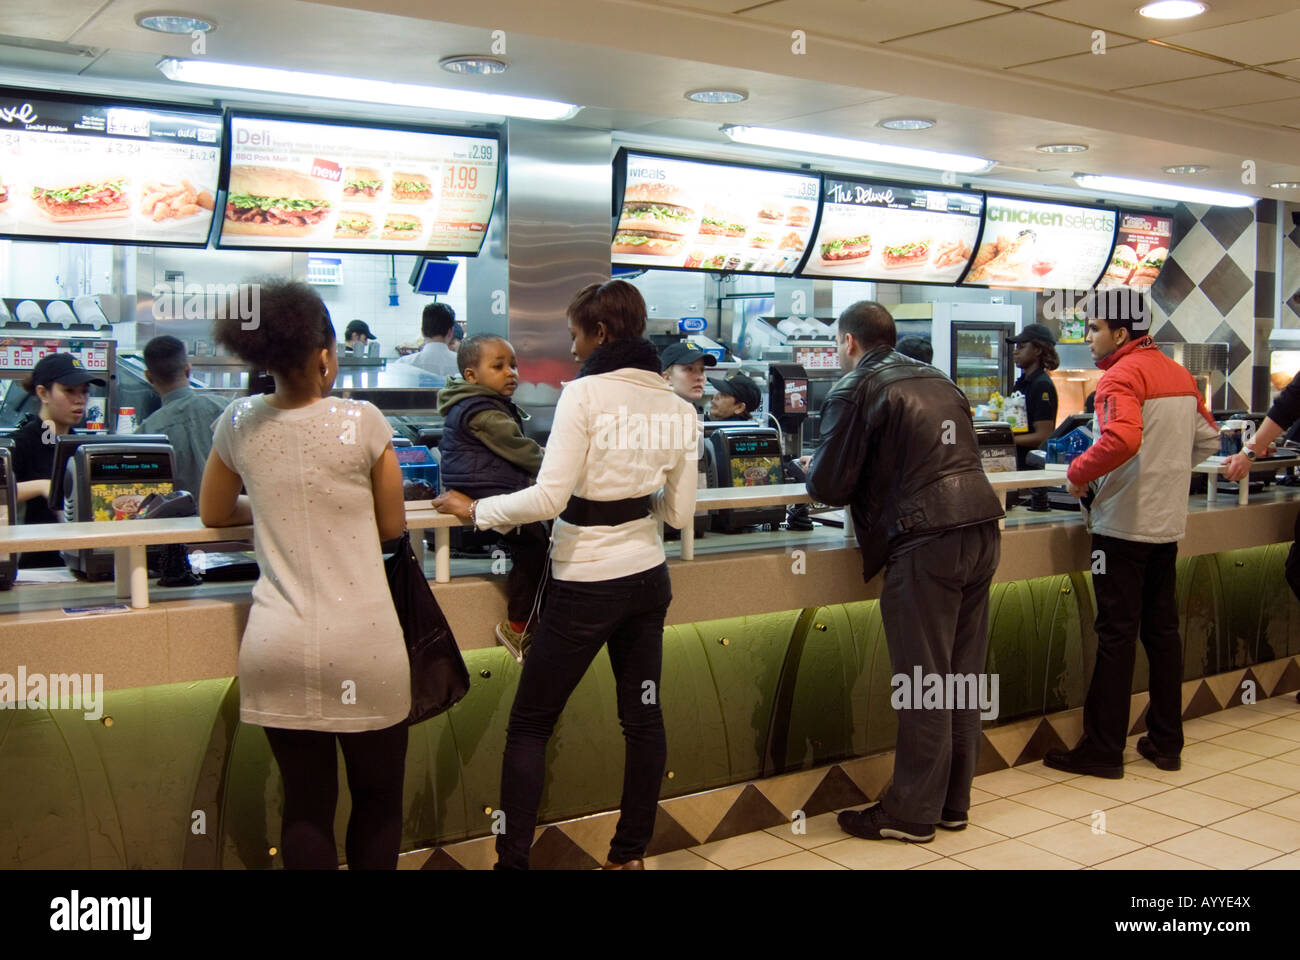 Customers at a McDonald's restaurant, England UK Stock Photo